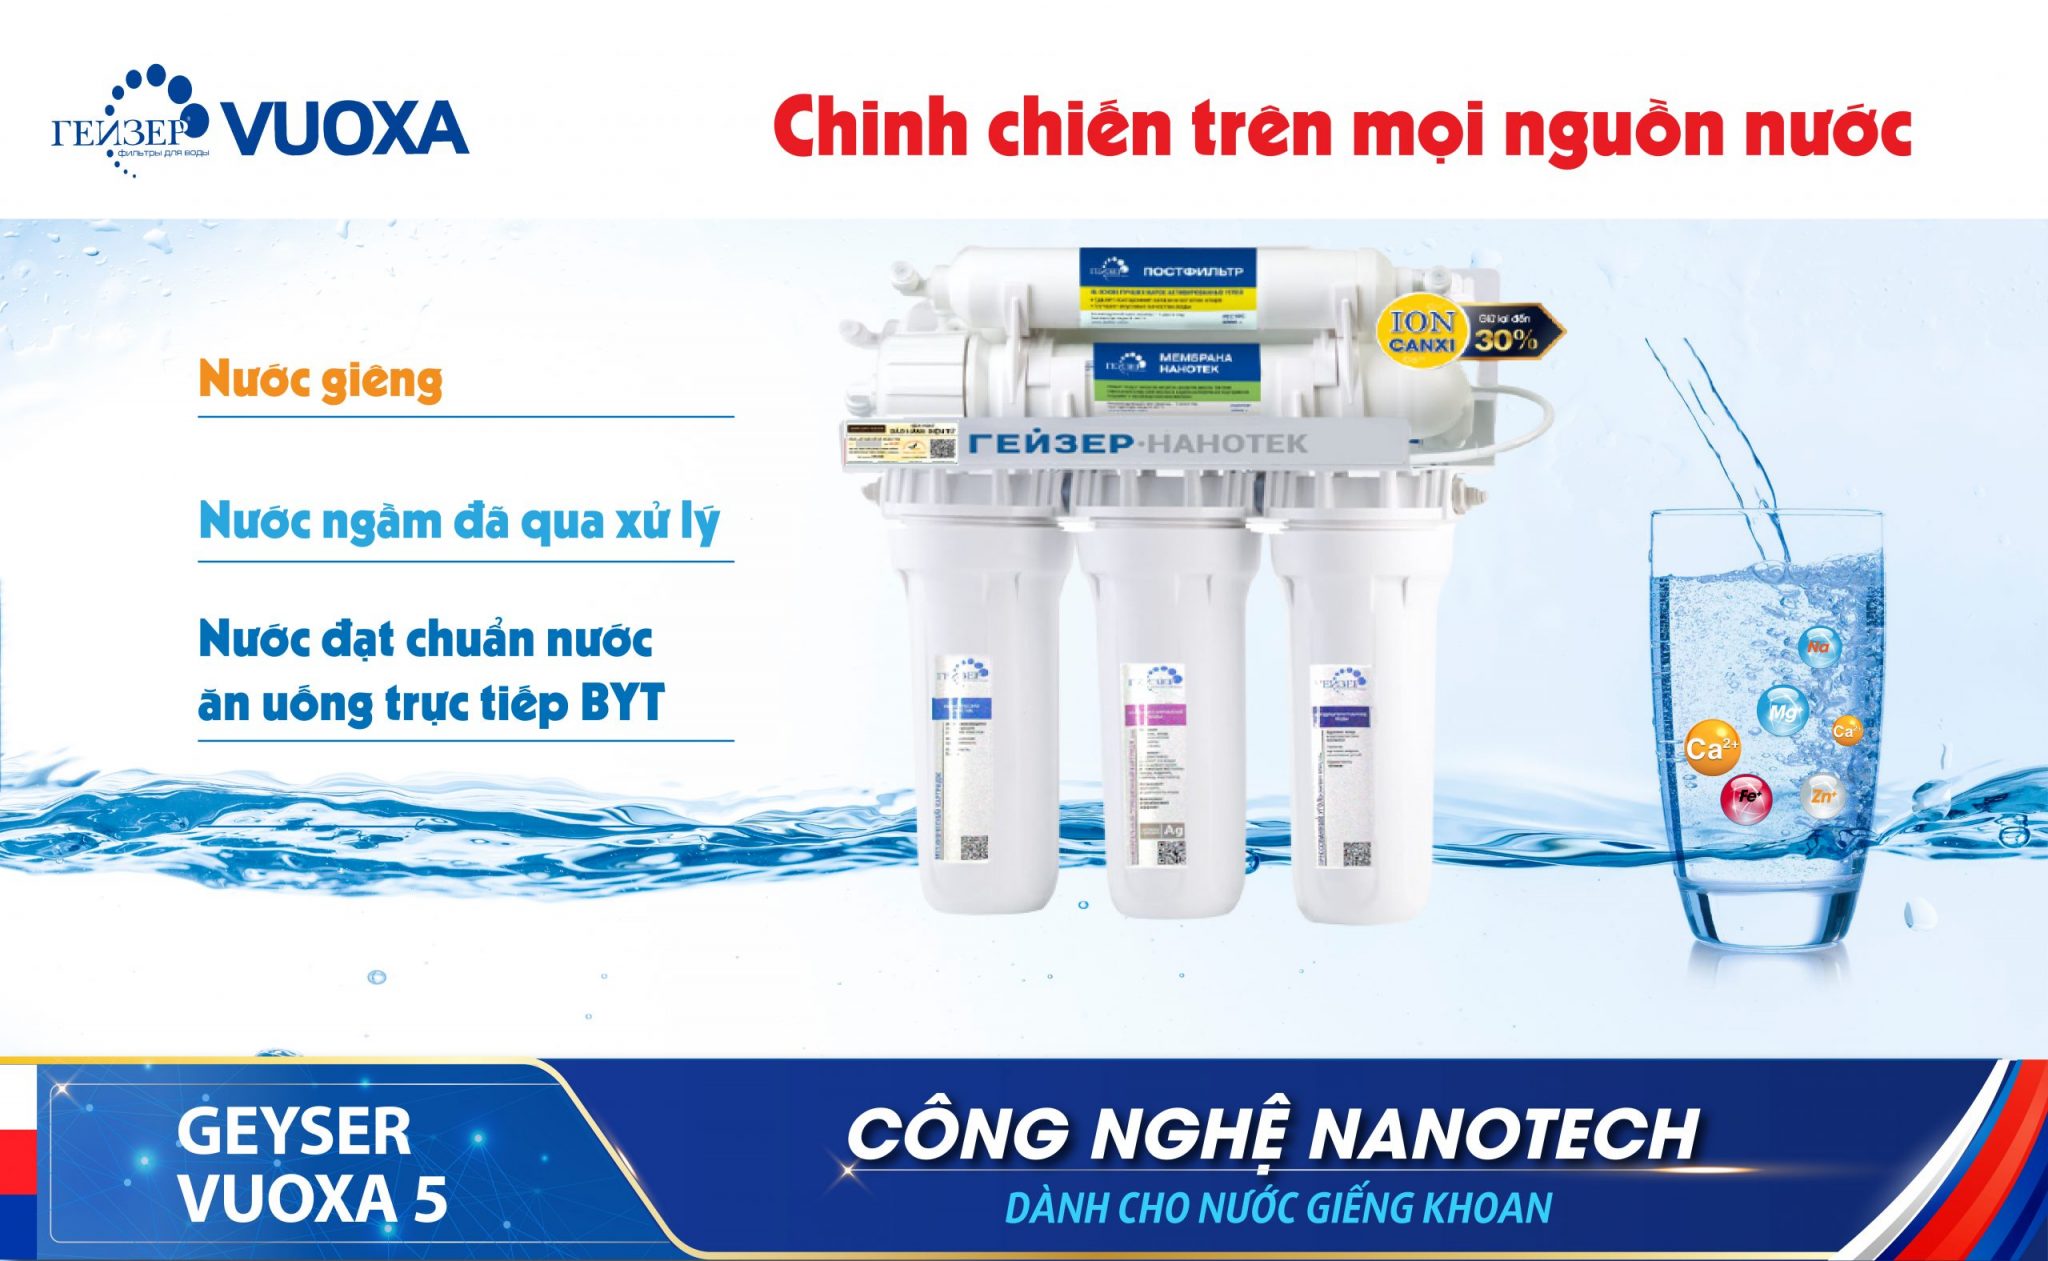 Geyser Vuoxa 5 lọc mọi nguồn nước ở Việt Nam